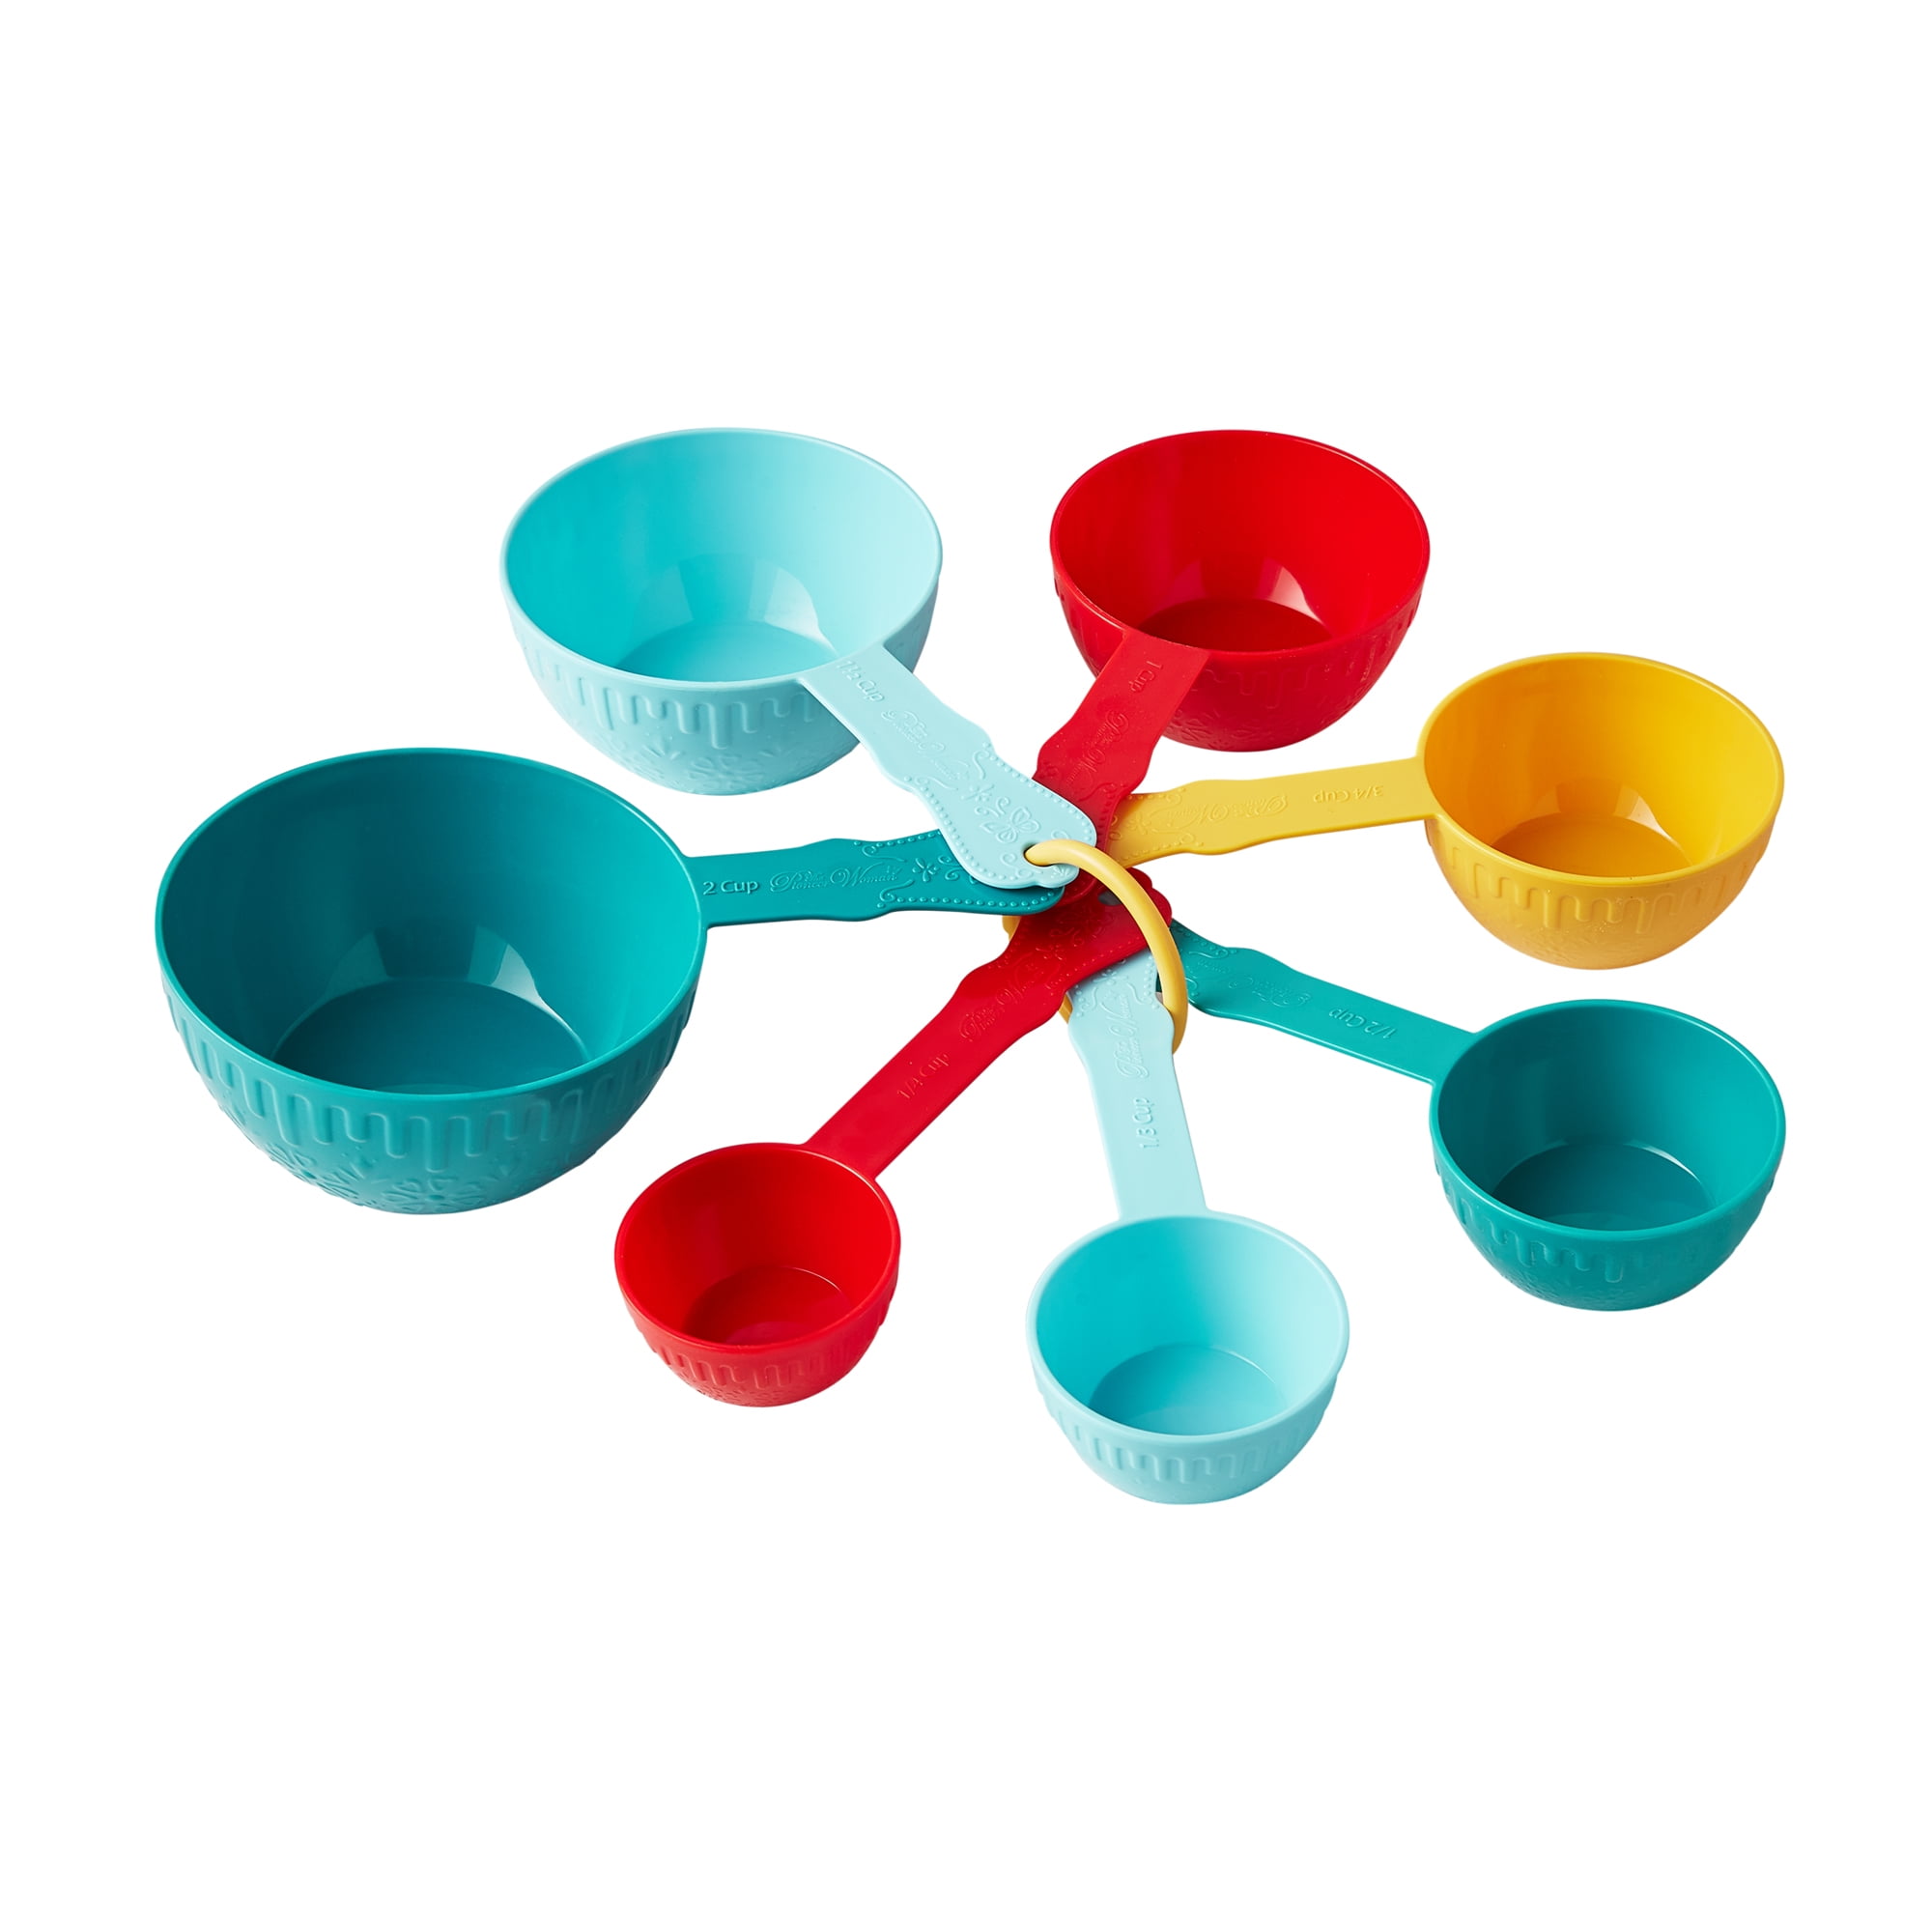 Cooking Concepts Measuring Cup & Spoon 8 Pieces Set